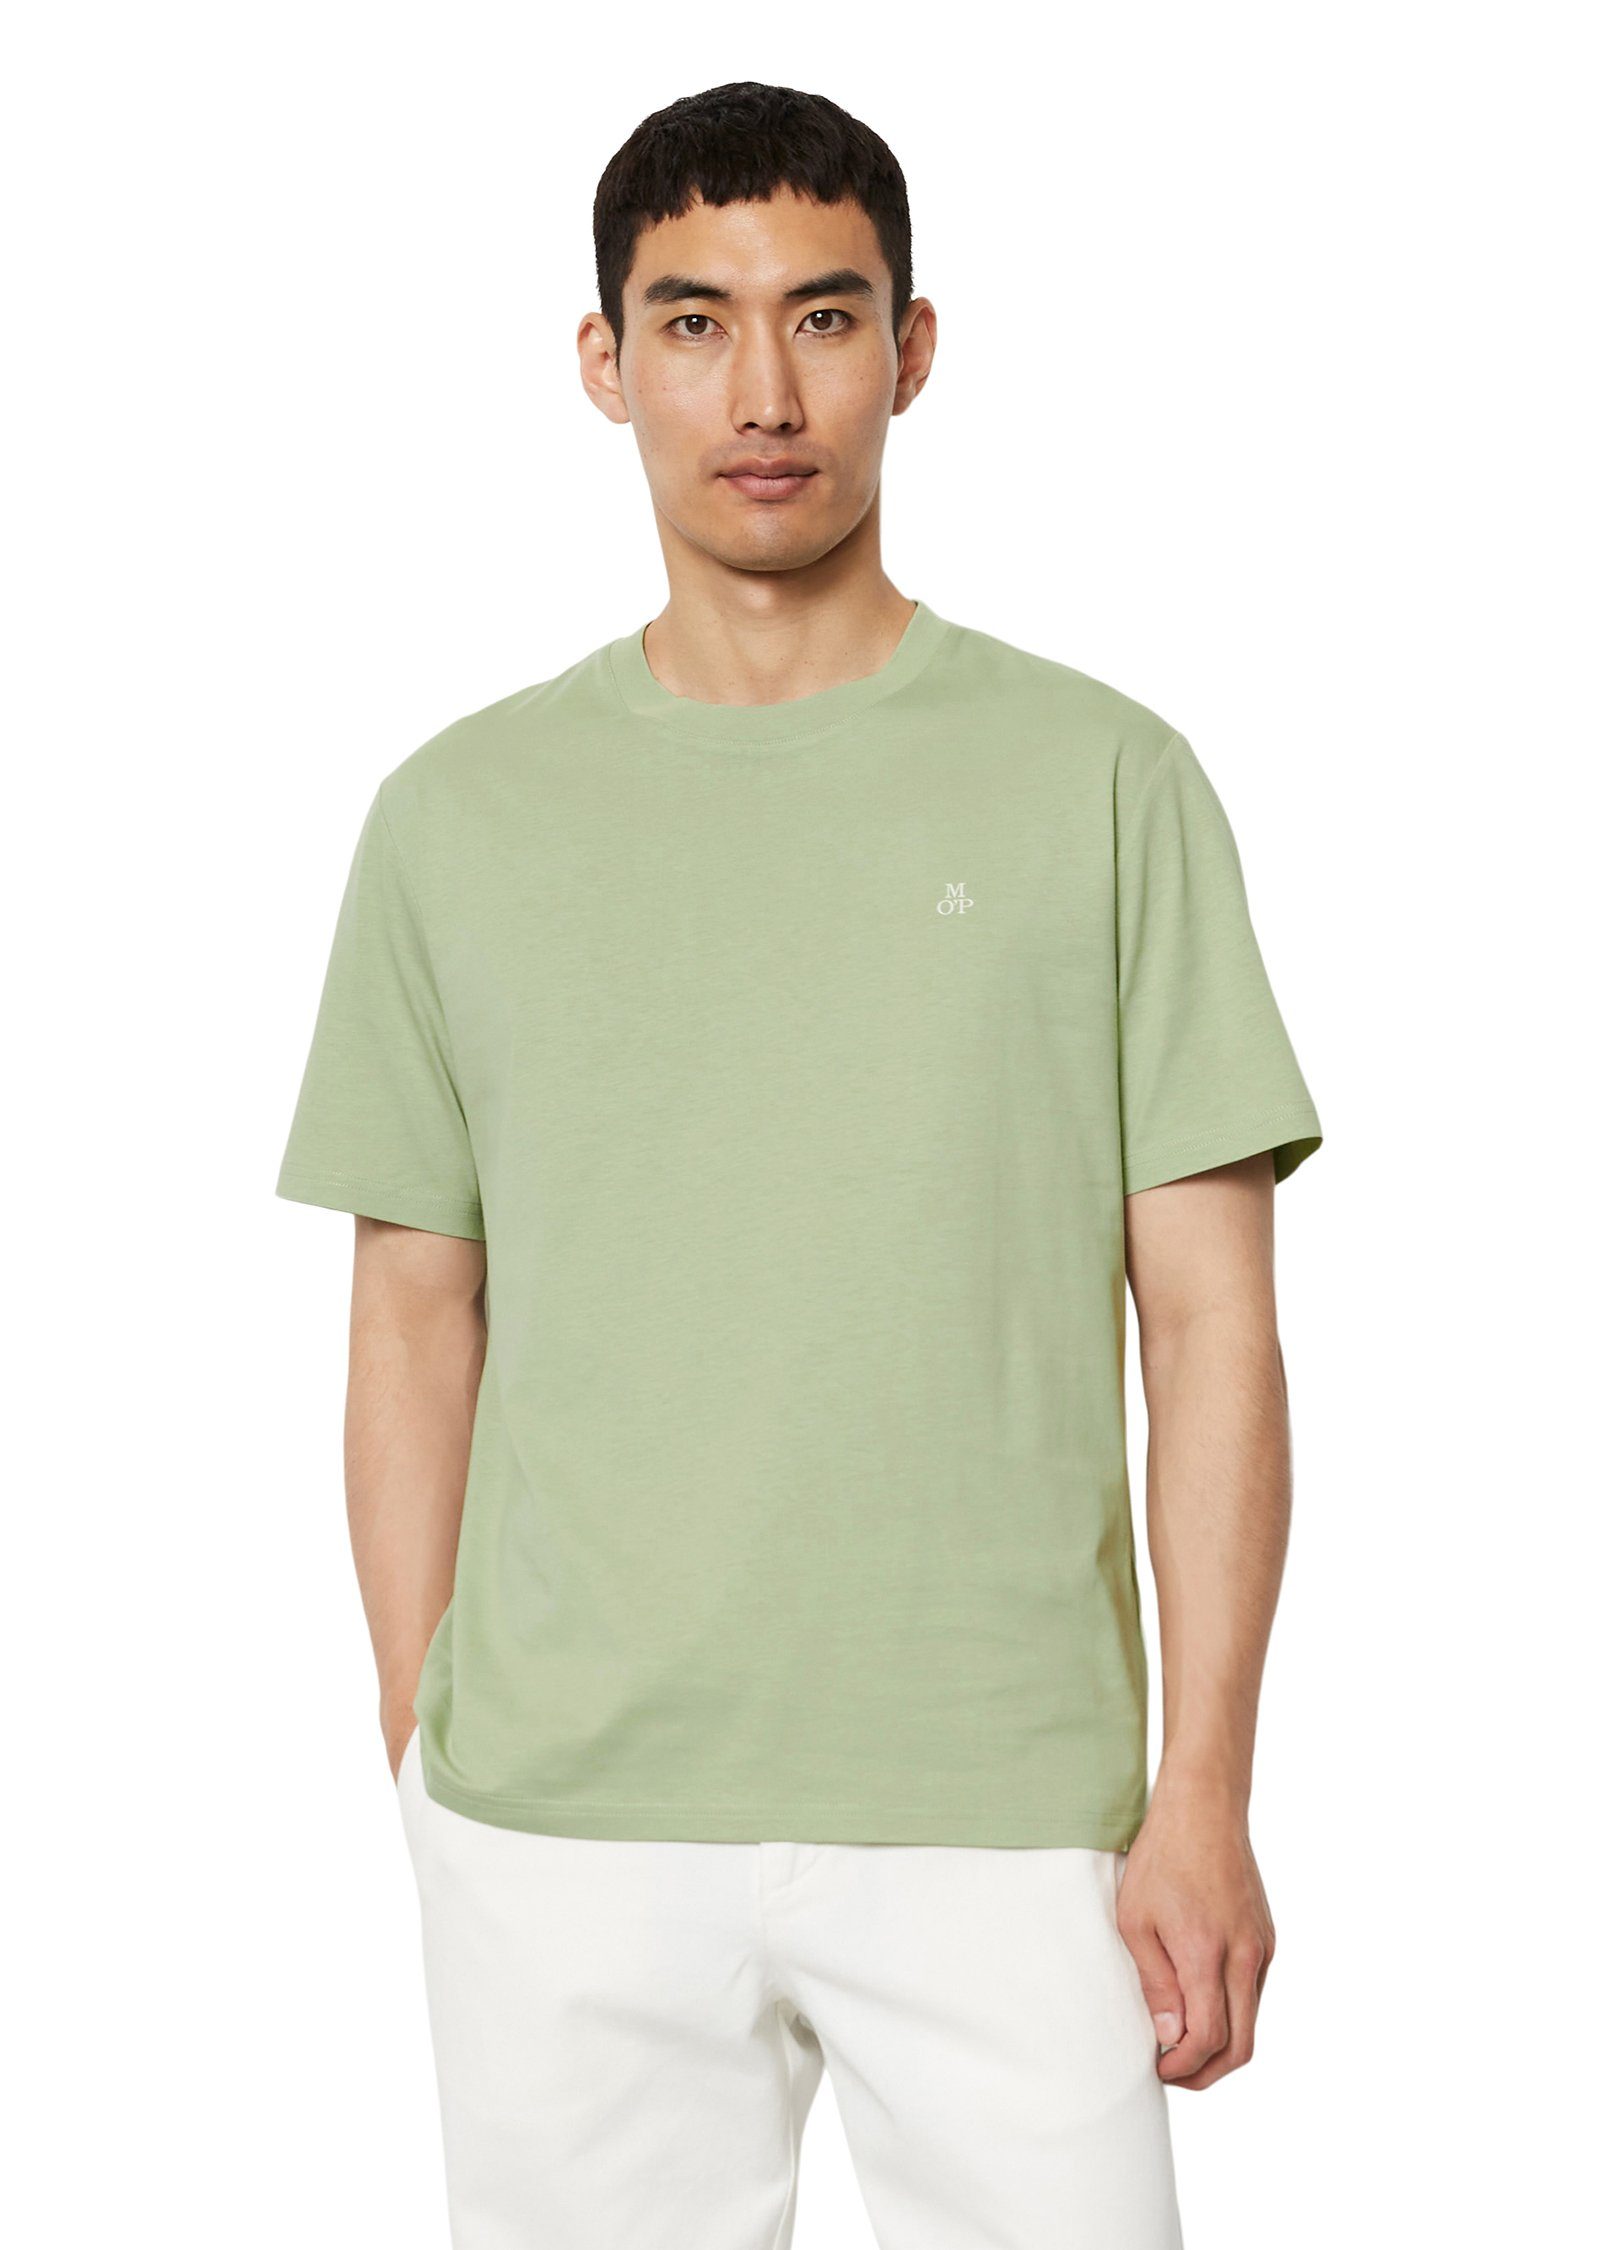 Marc O'Polo T-Shirt T-shirt, short sleeve, logo print, ribbed collar rainee